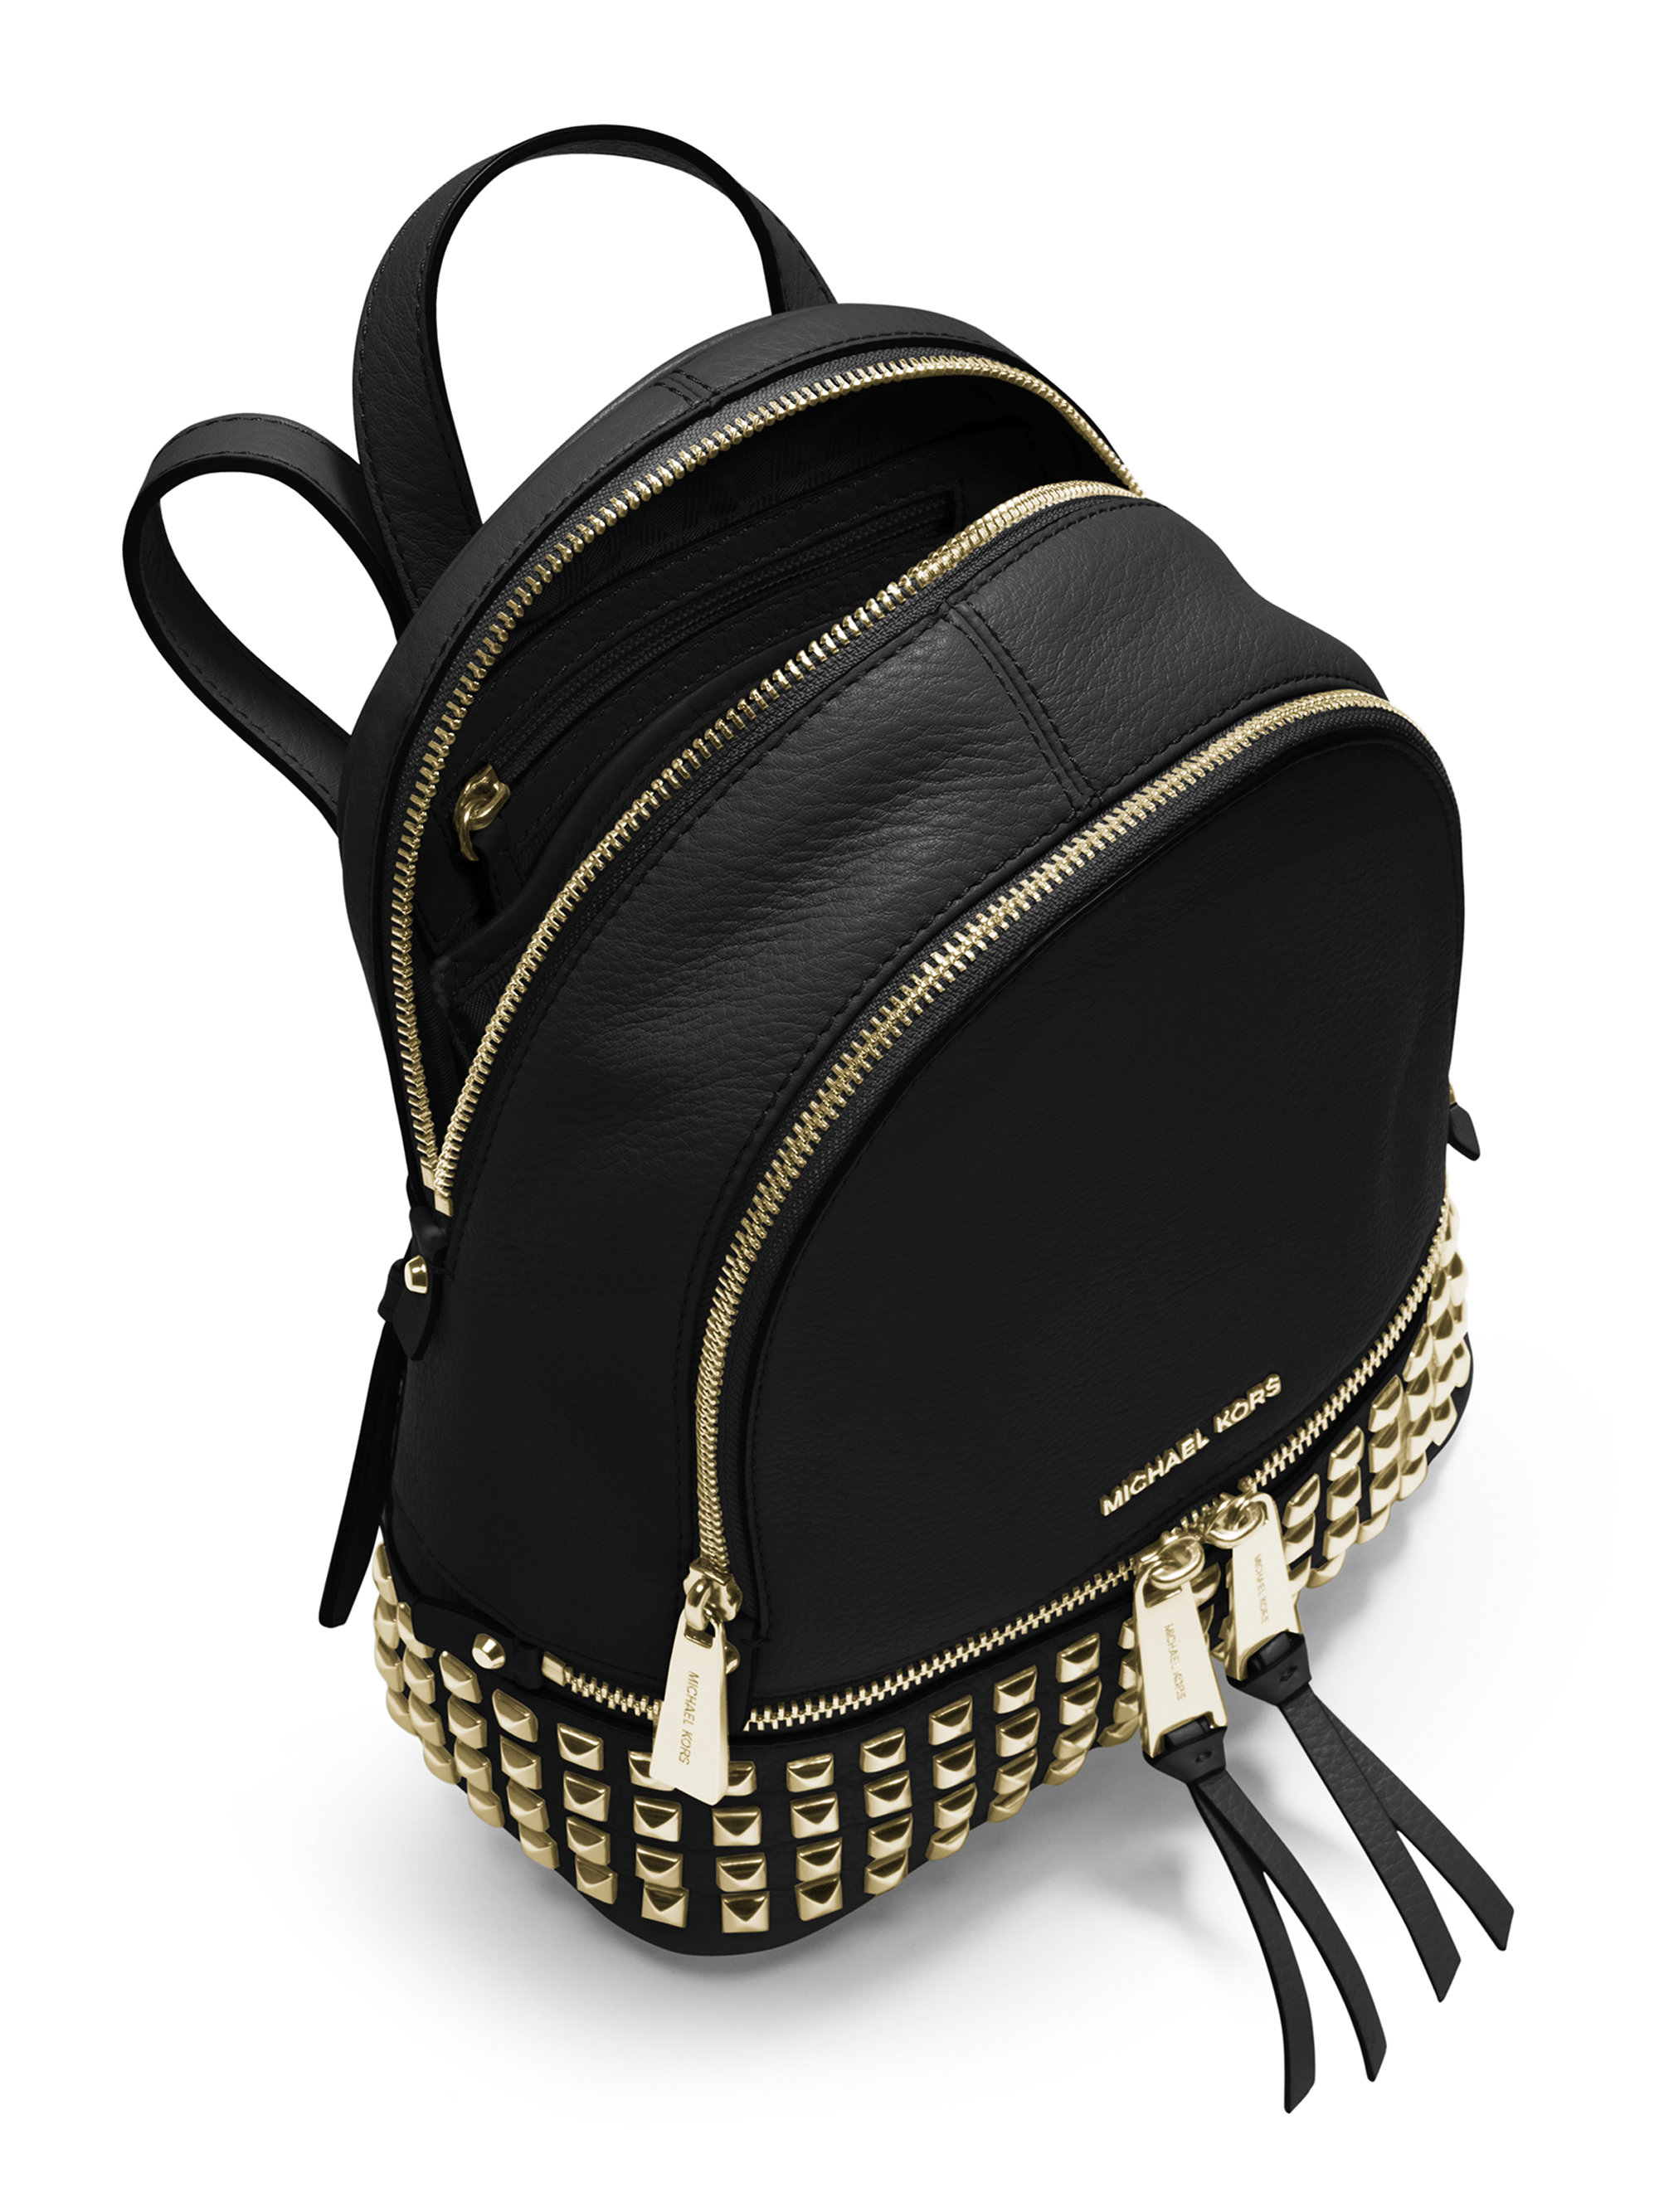 MICHAEL Michael Kors Rhea Mini Studded Leather Backpack in Black - Lyst